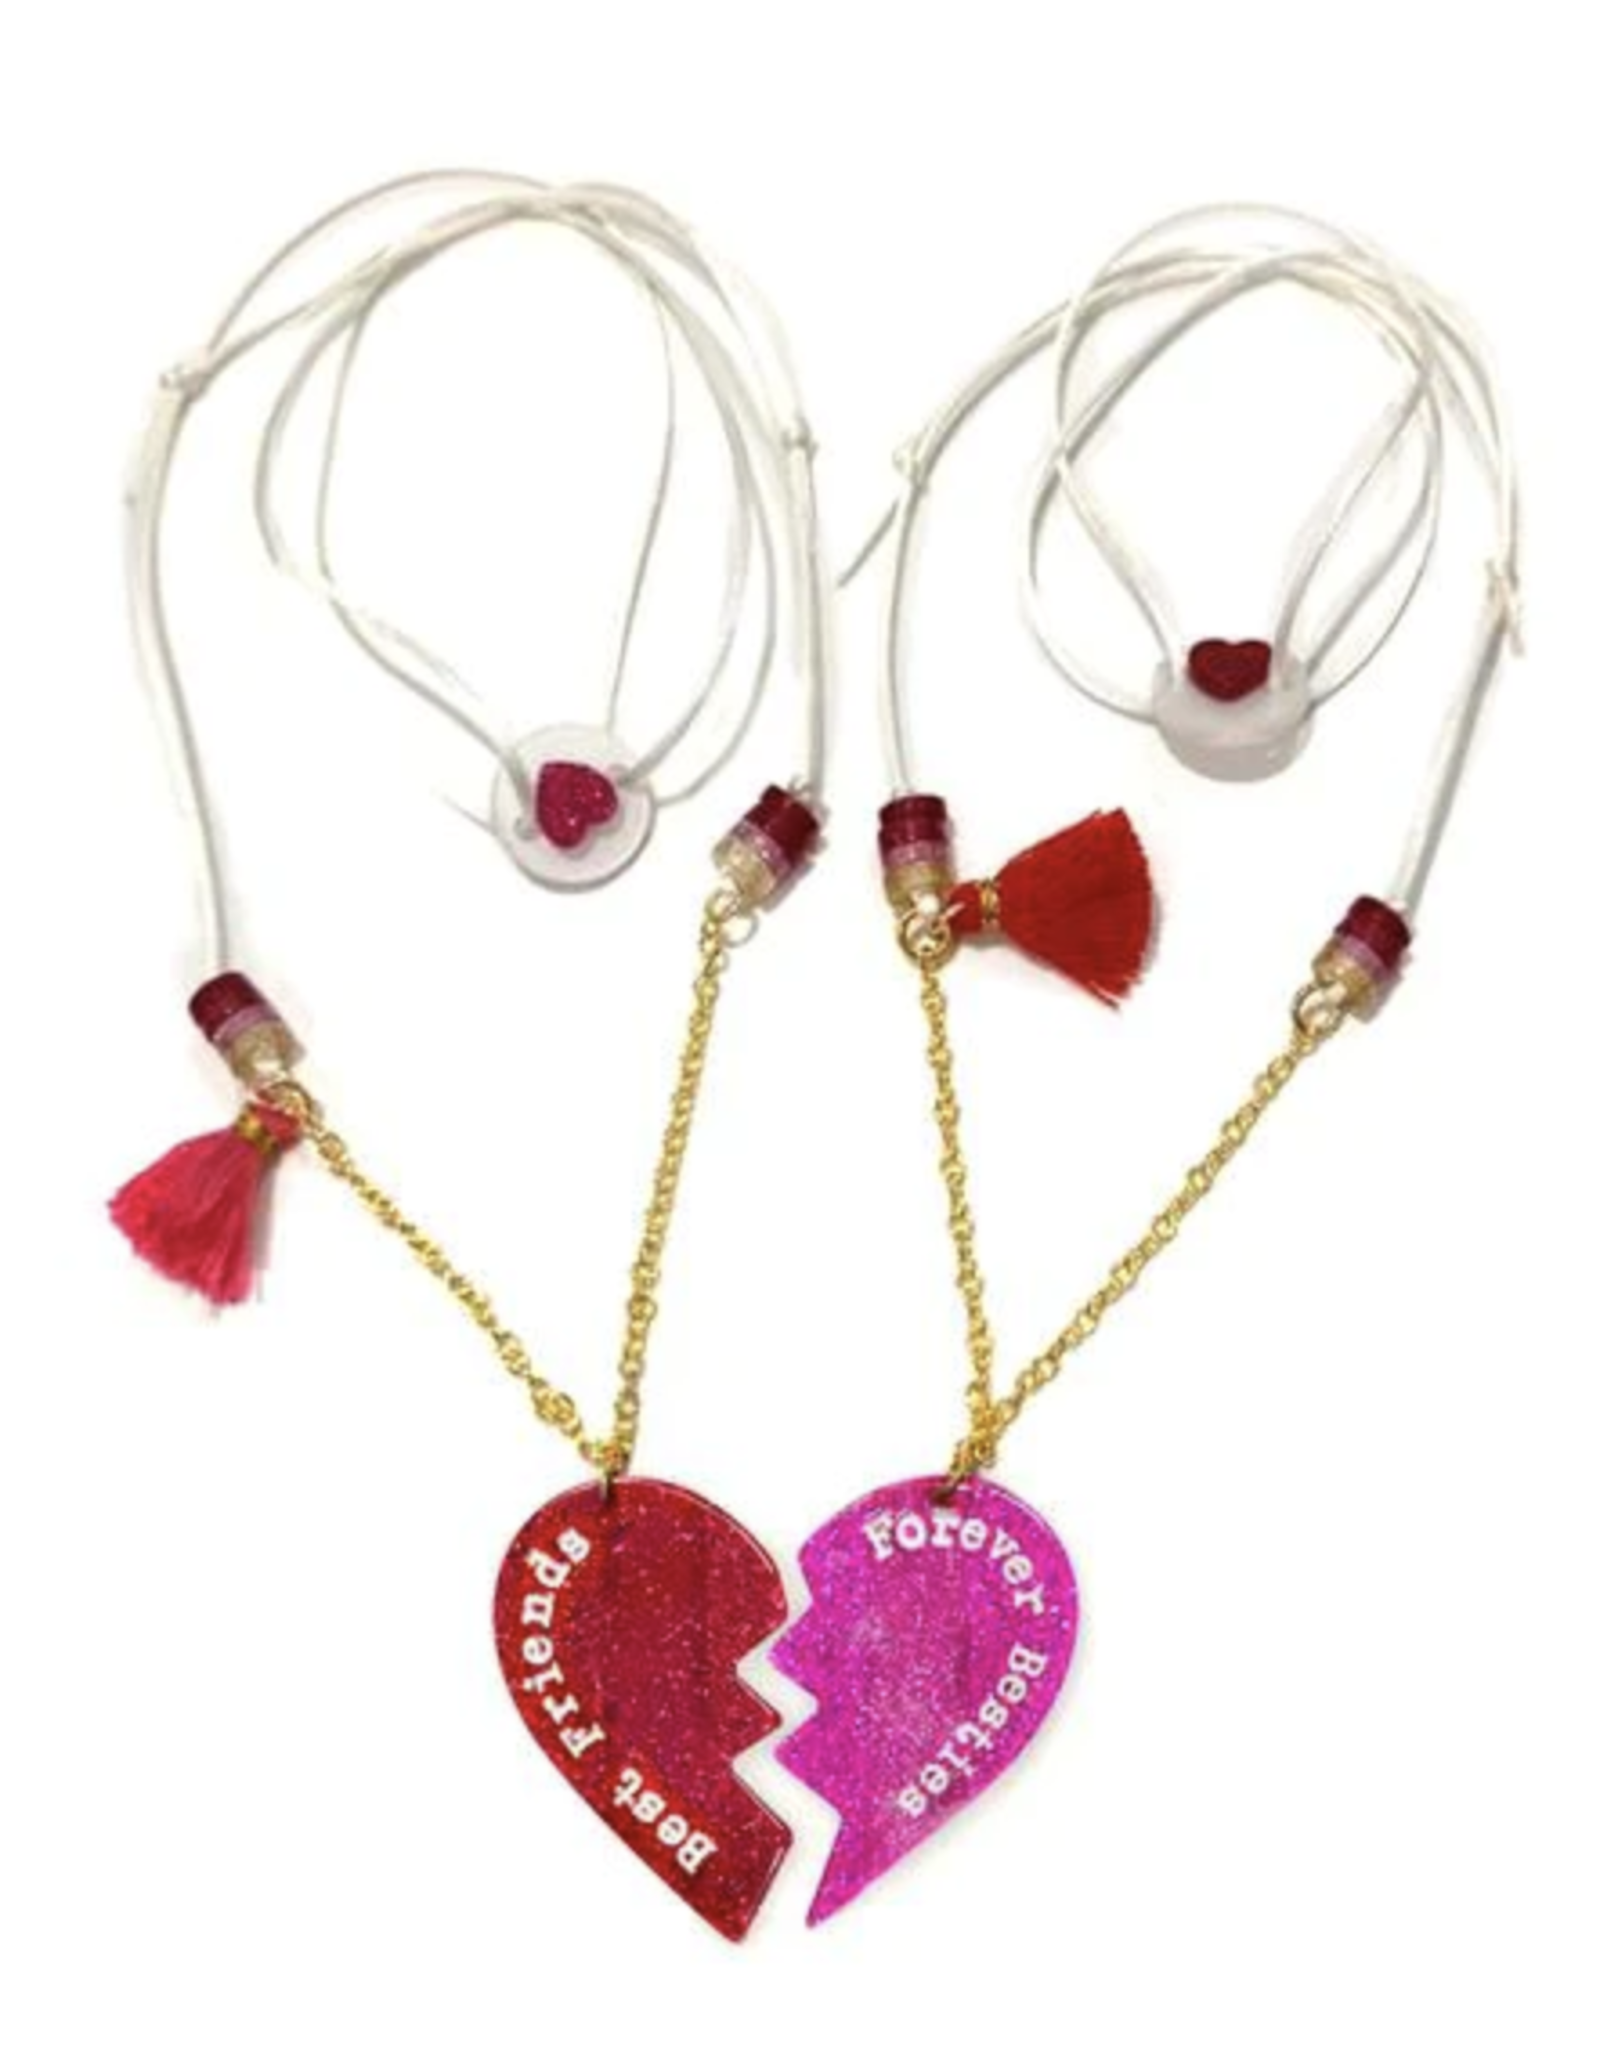 Lilies & Roses bff heart split necklace set